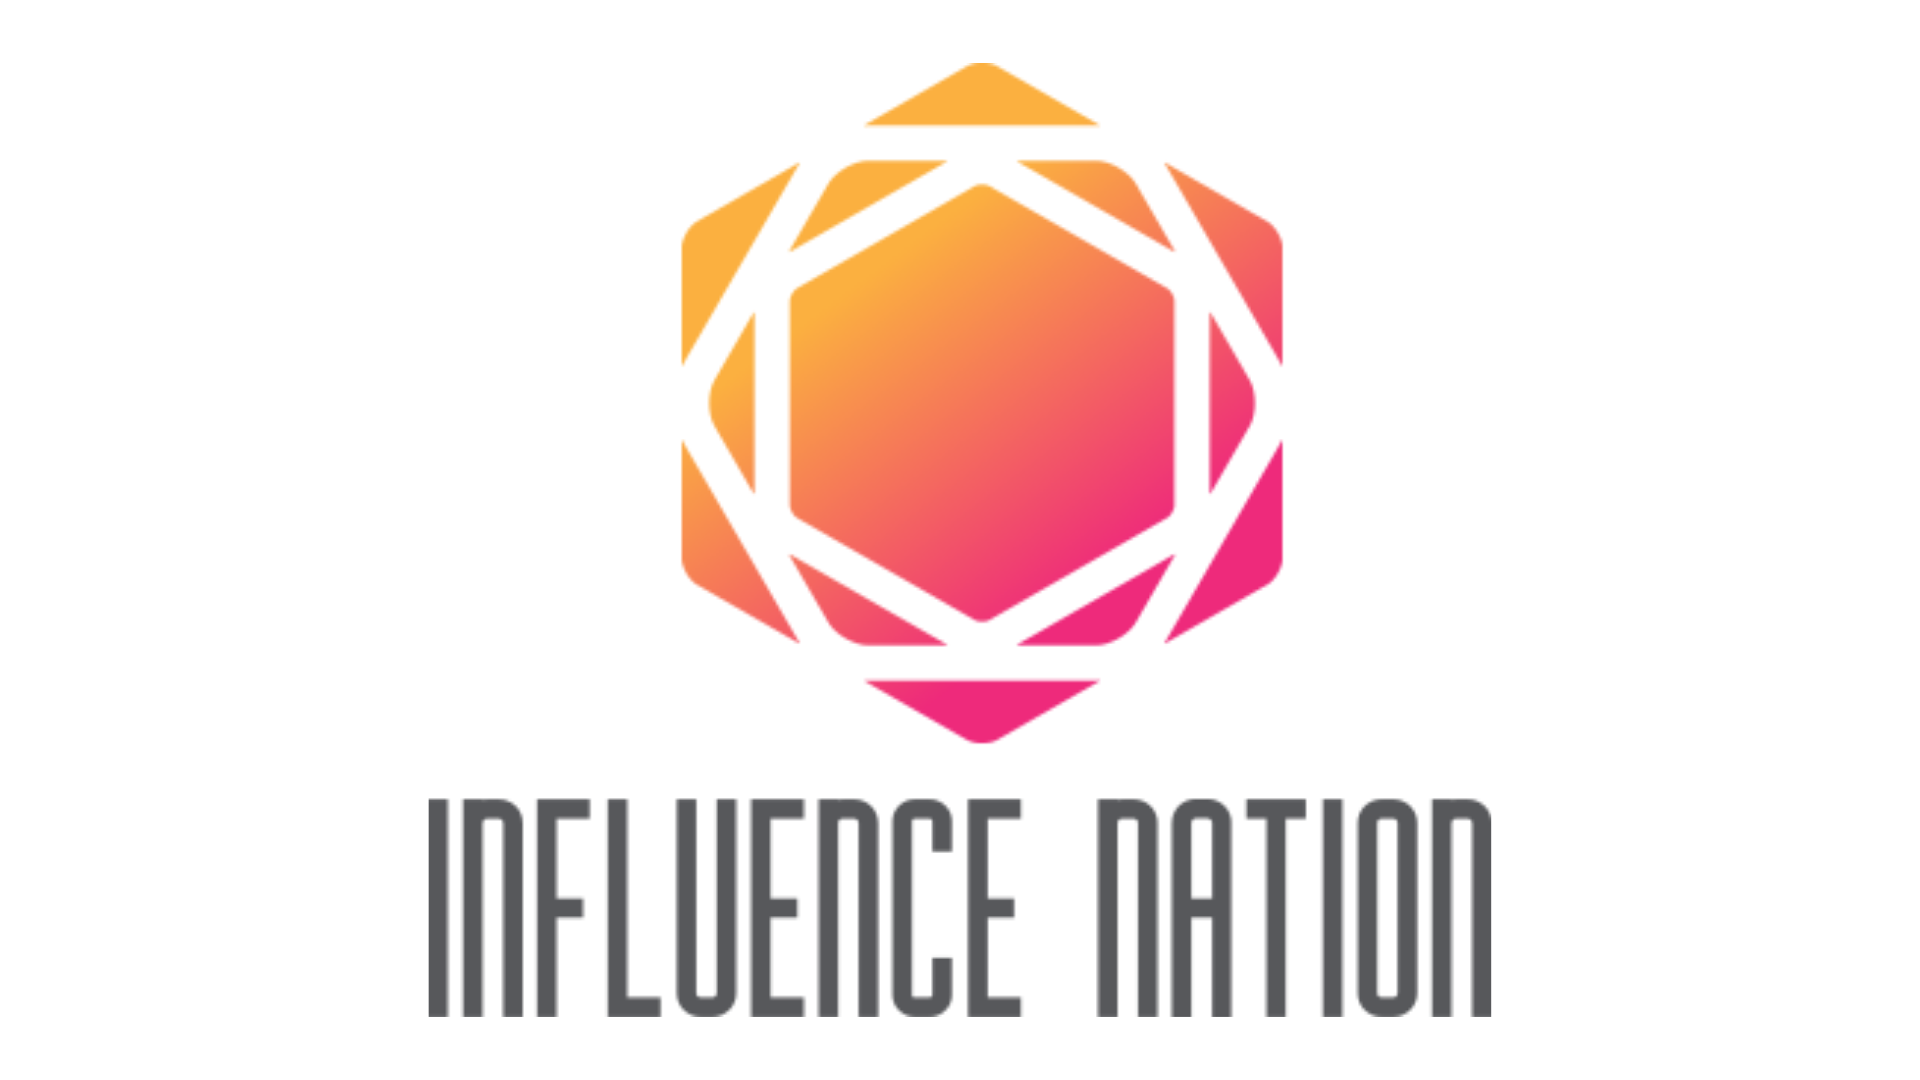 influence nation agency logo